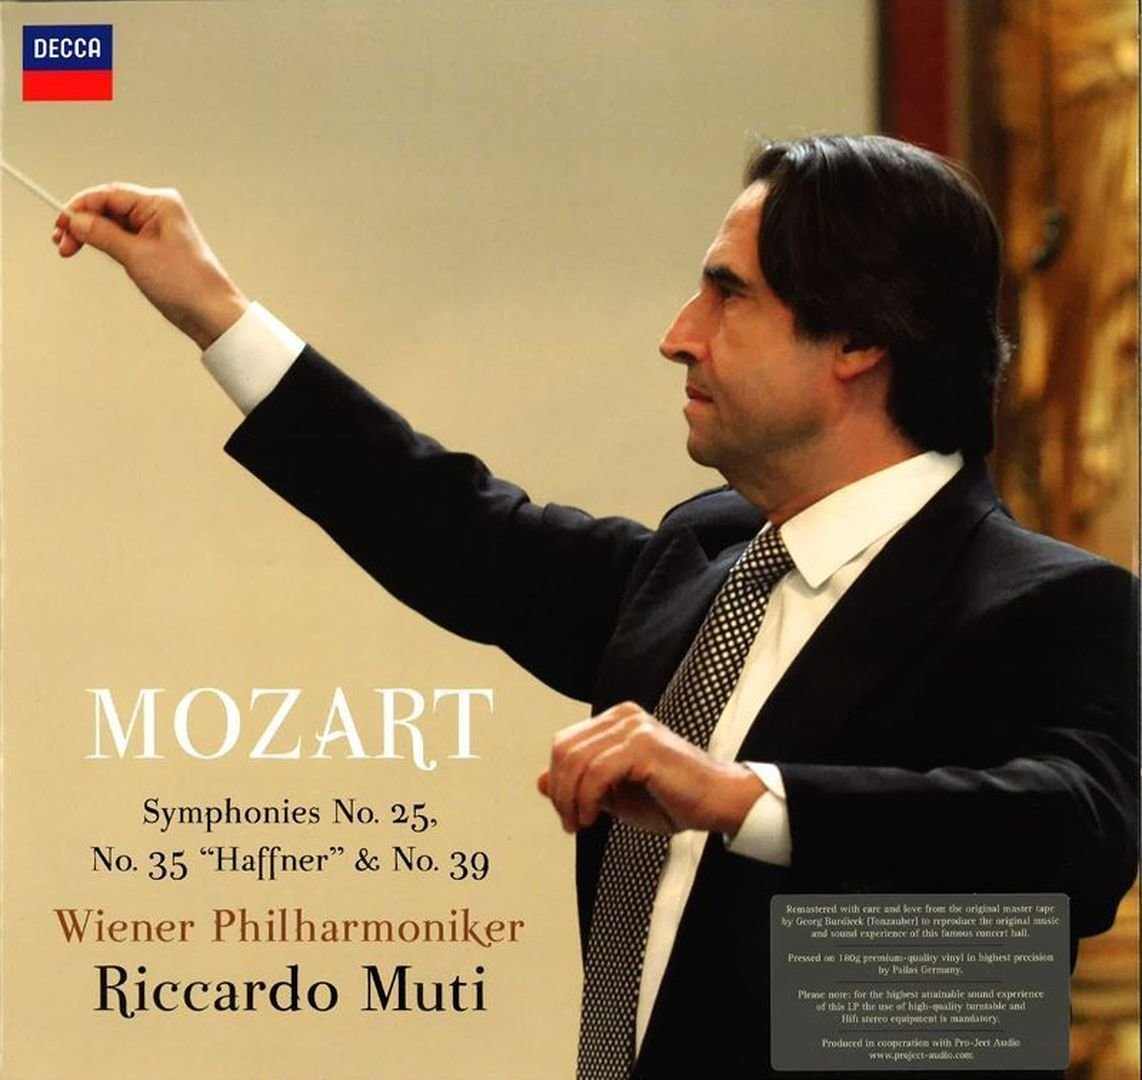 Disco de vinilo Riccardo Muti Mozart Symphonies Nr. 25, 35, 39 (2 LP)